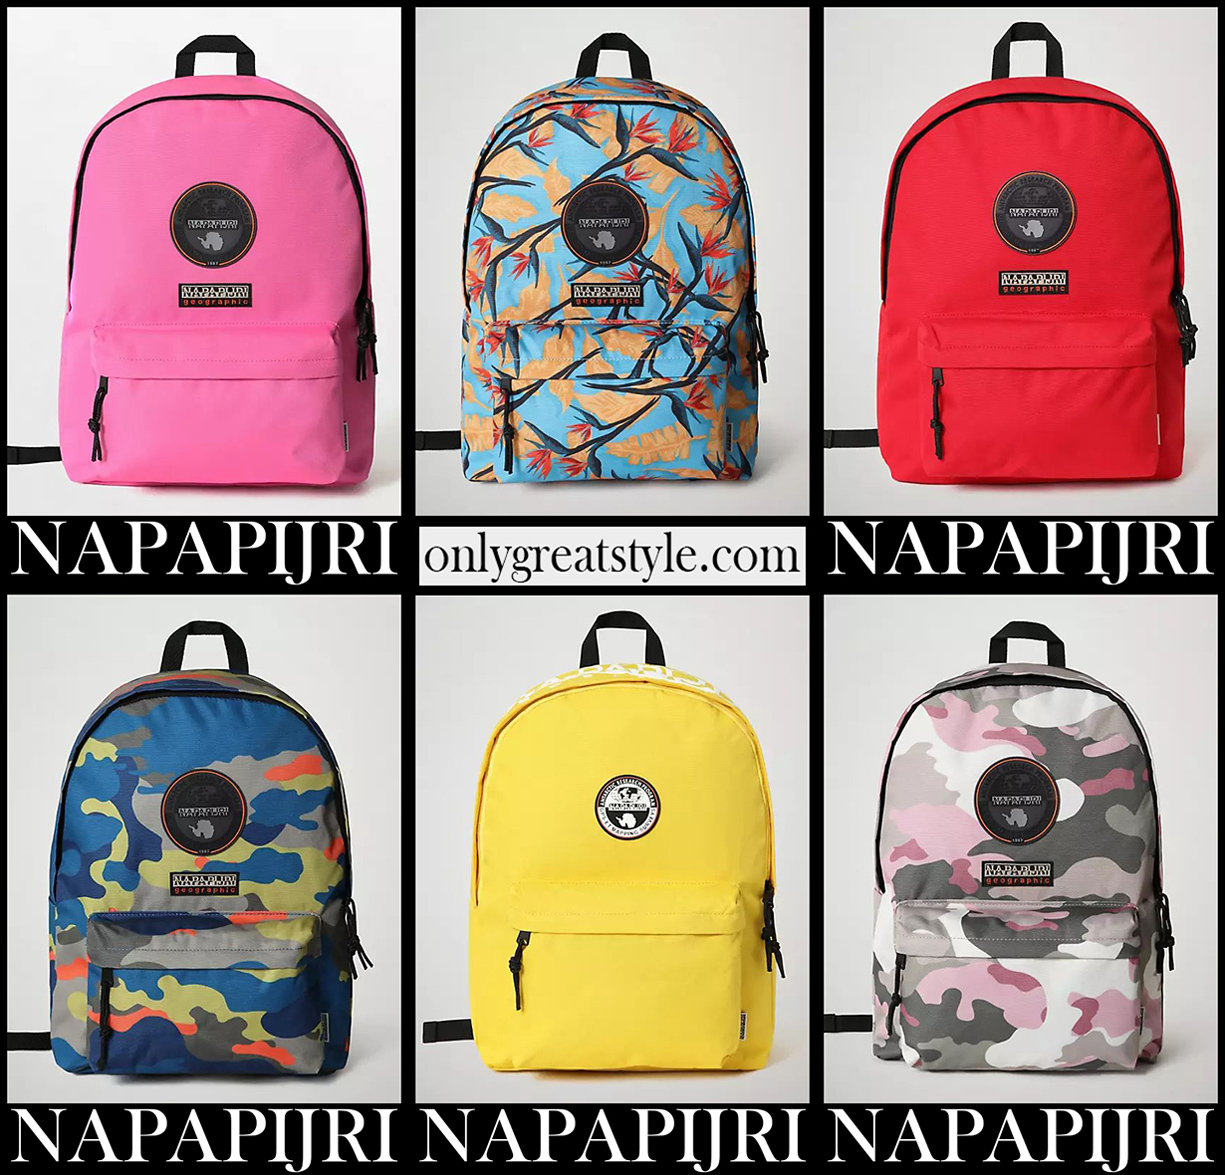 Napapijri backpacks 2021 2022 new arrivals school free time